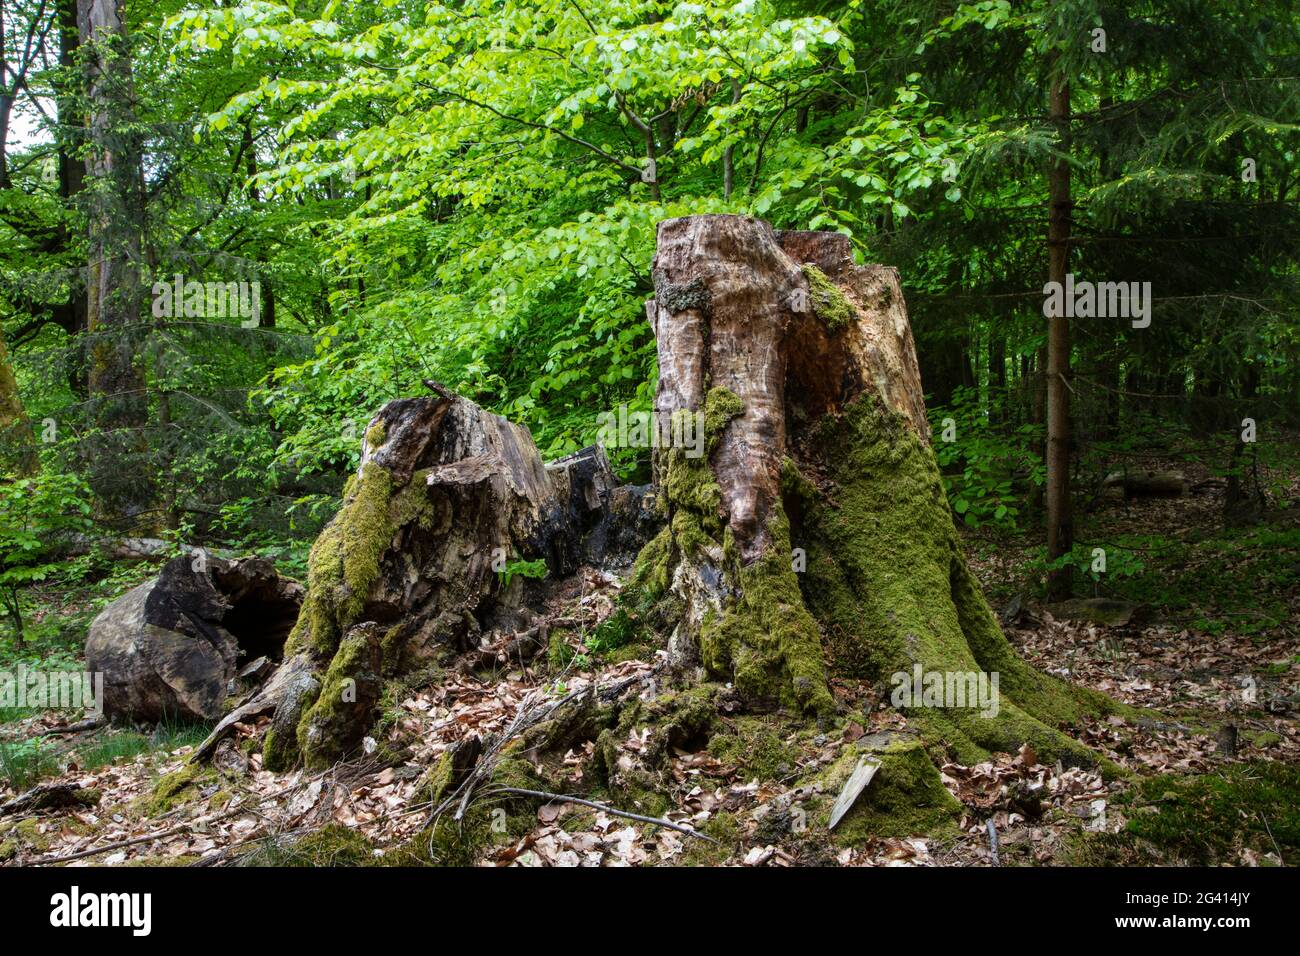 Mosses on tree trunk, near Rohrbrunn, Räuberland, Spessart-Mainland, Franconia, Bavaria, Germany Stock Photo